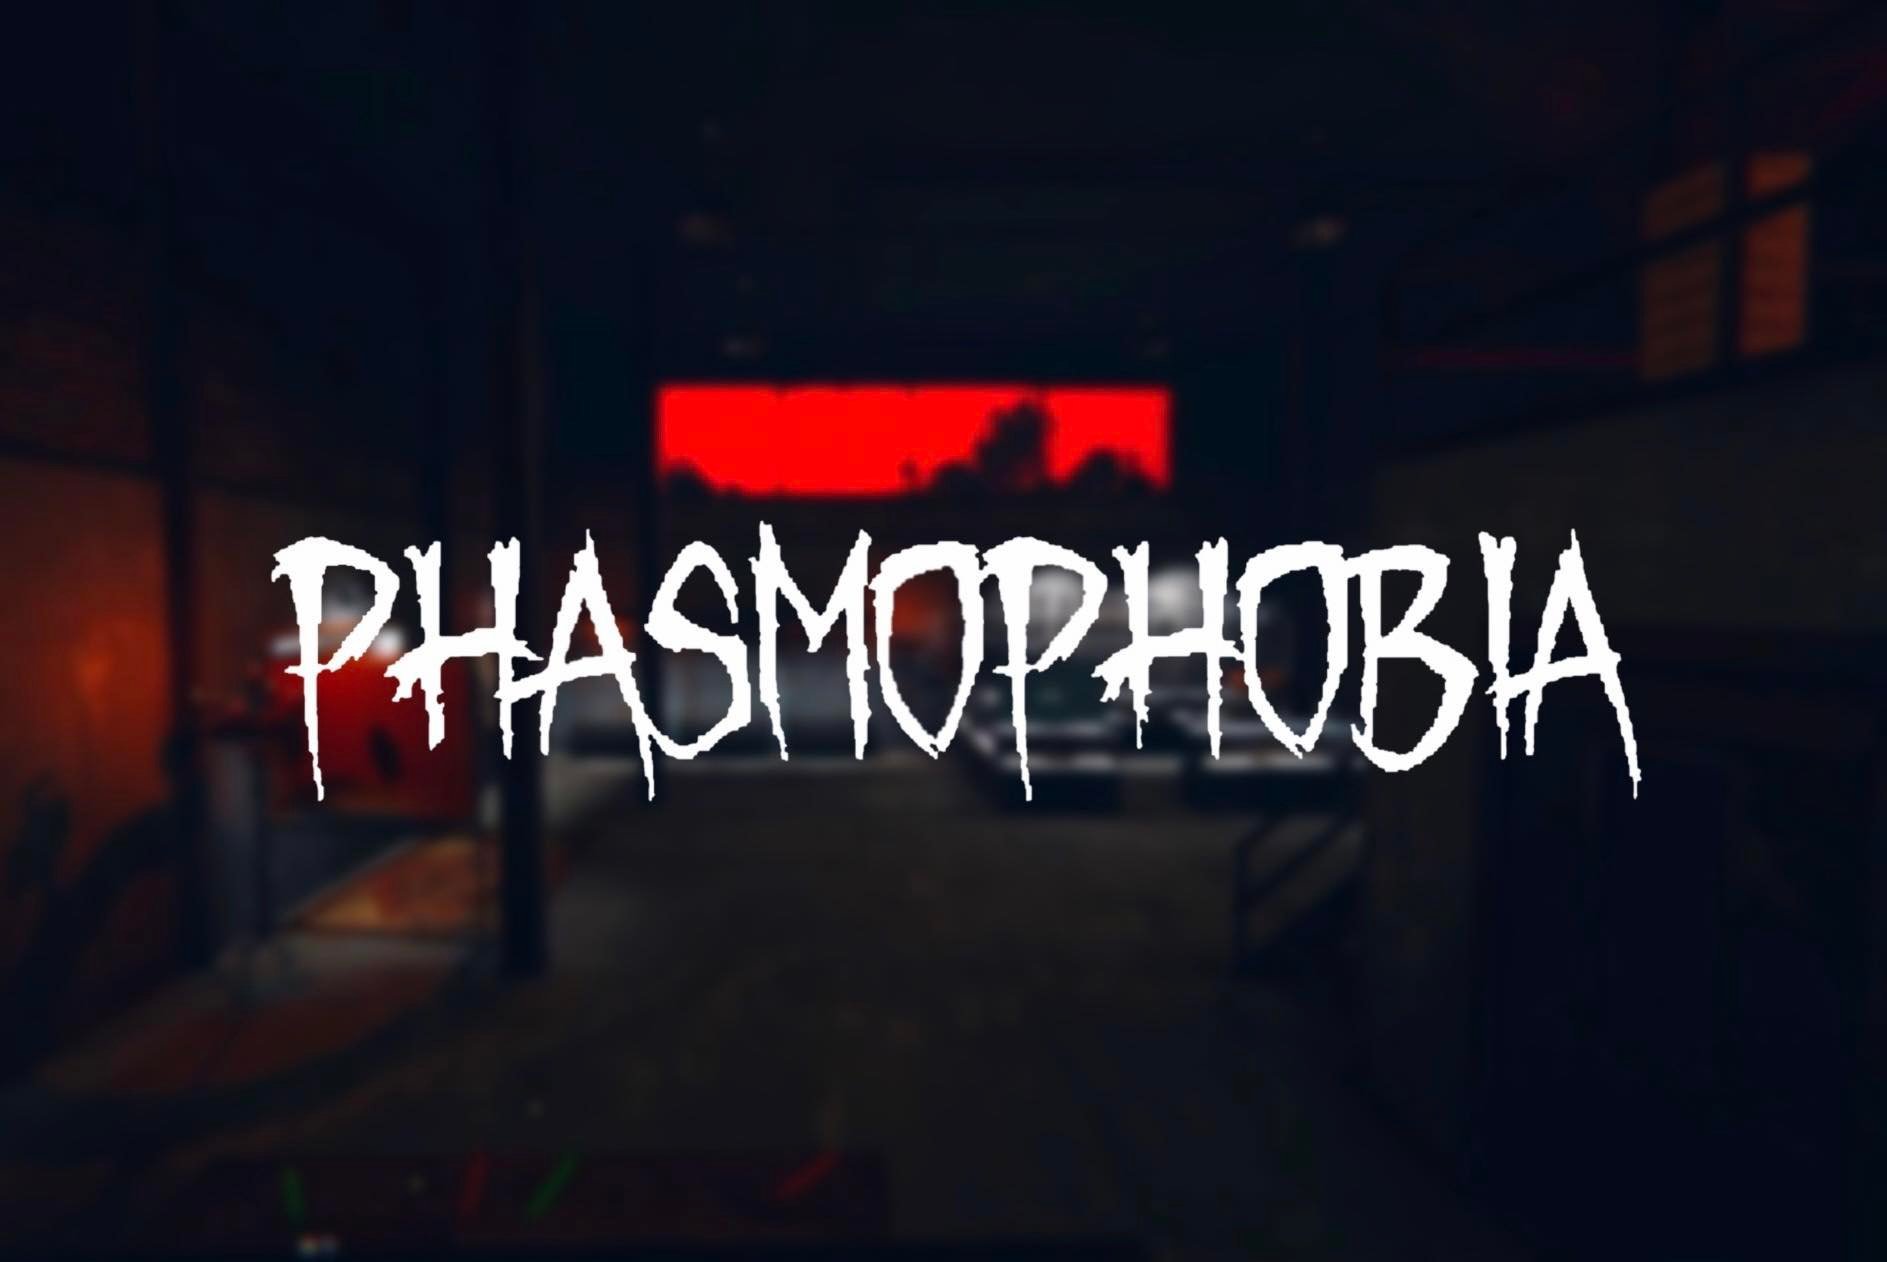 команды для разговора phasmophobia фото 67